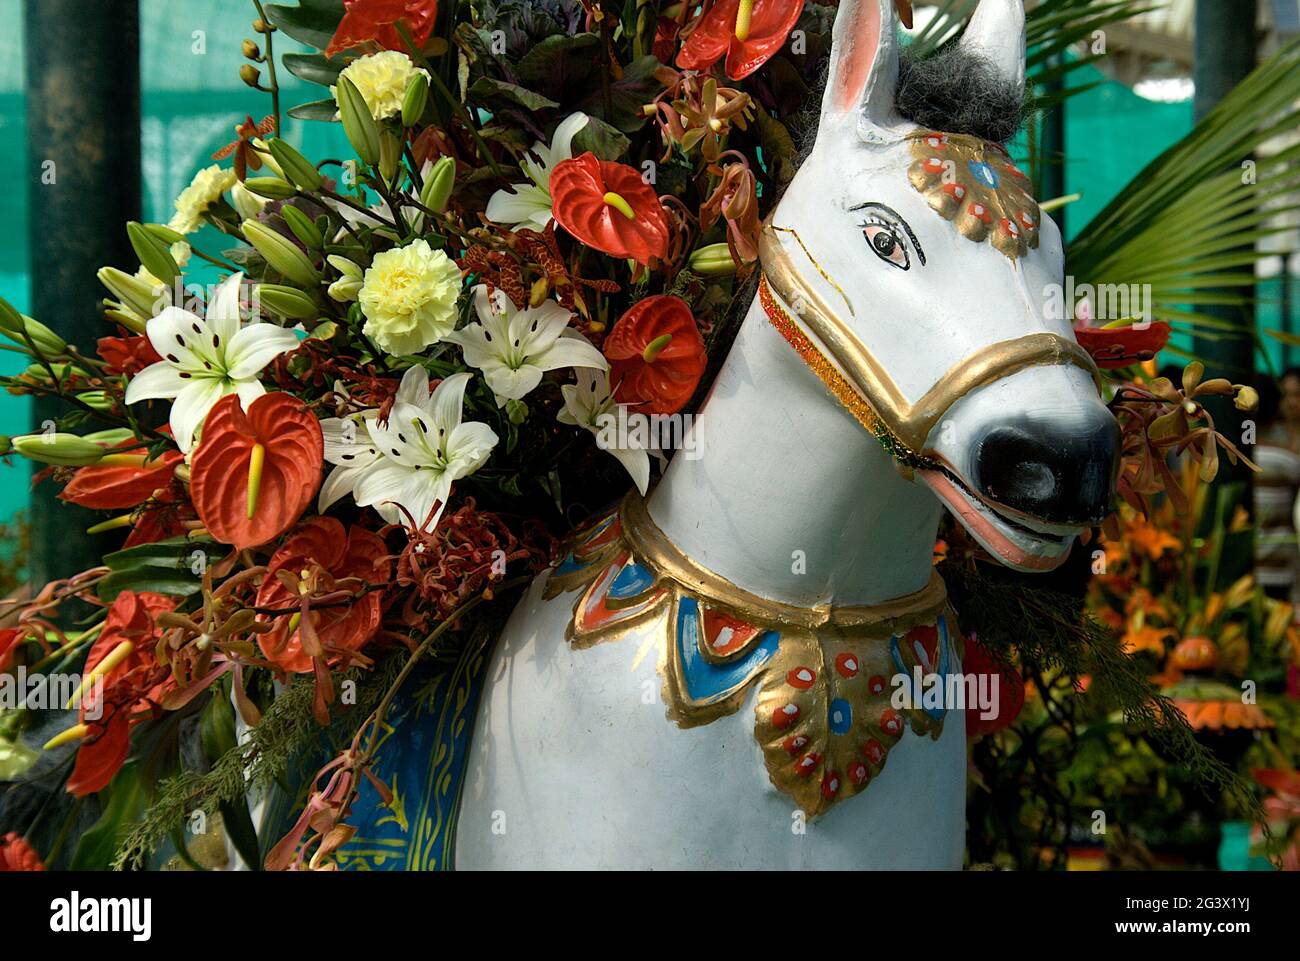 Flower Laden Image of Horse Stock Photo